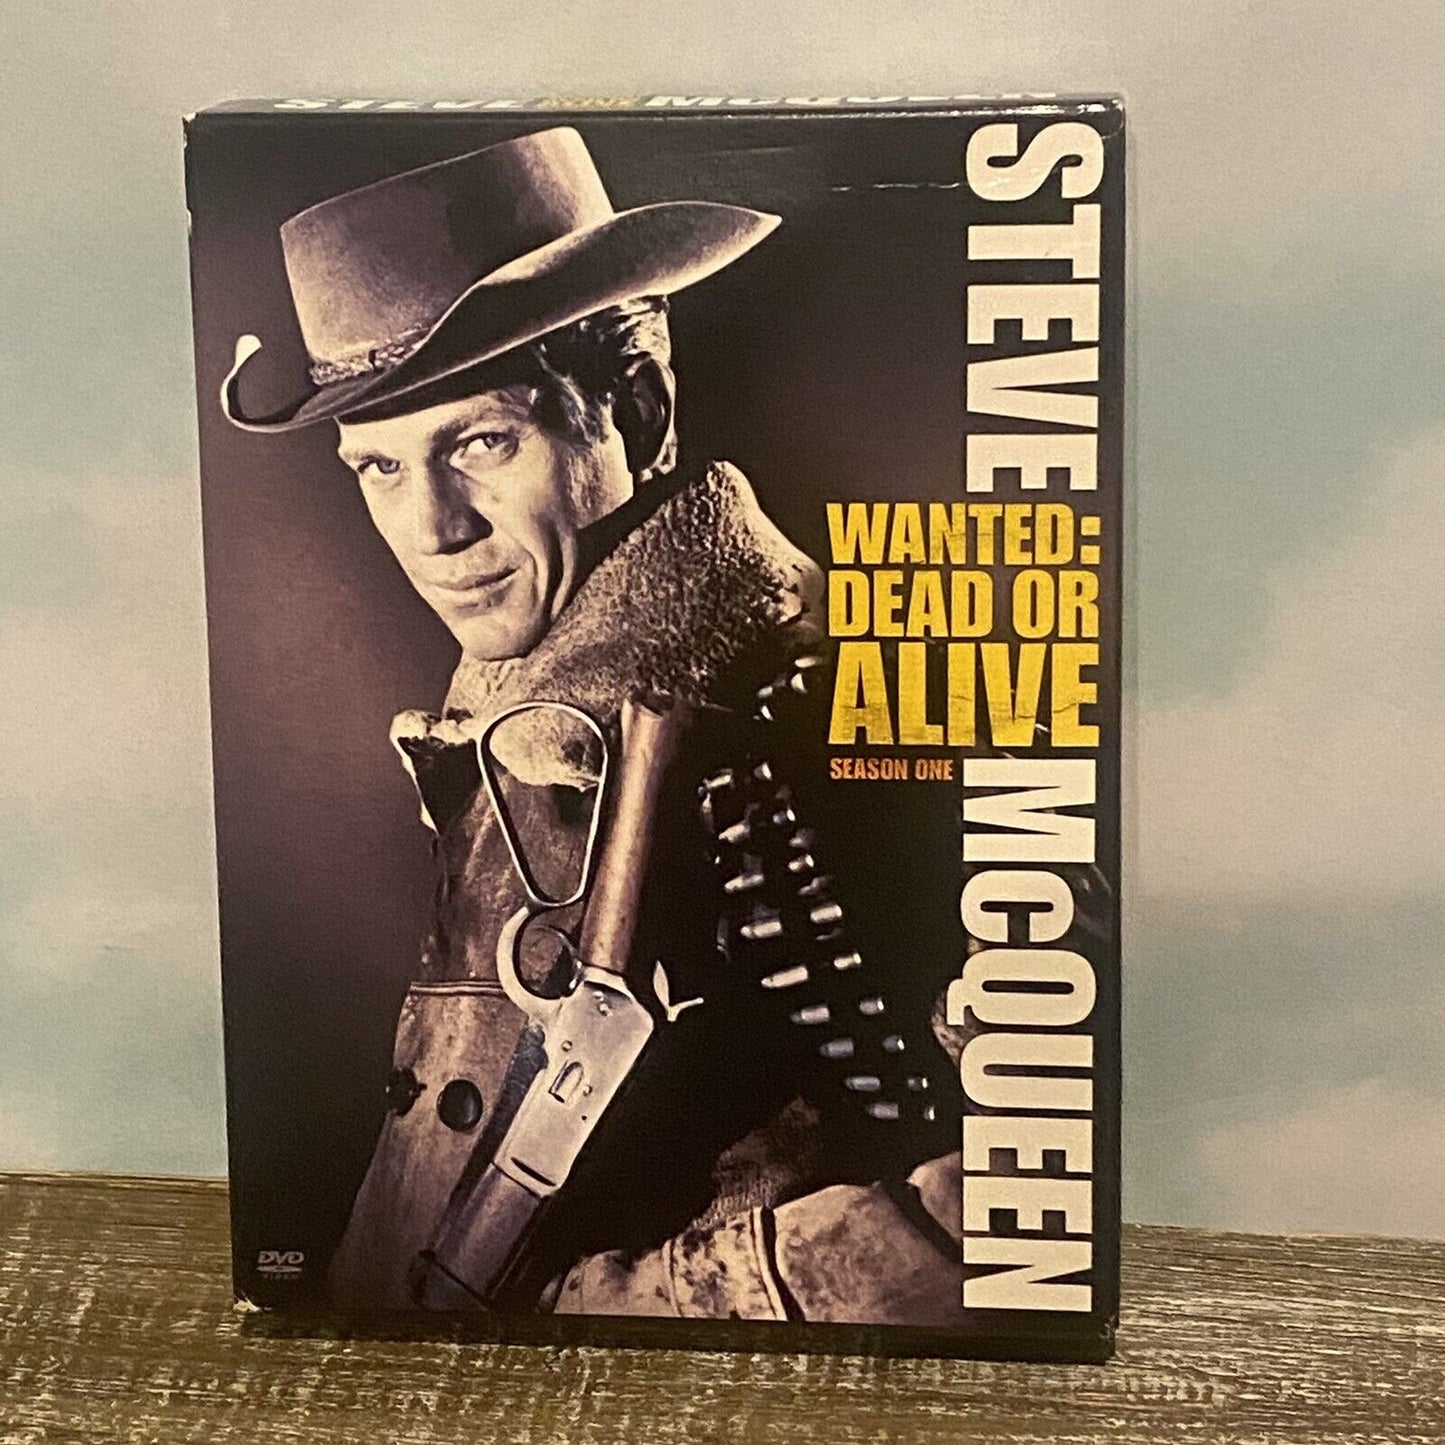 Wanted: Dead or Alive - Season 1 (DVD, 2005, 4-Disc Set) Steve McQueen